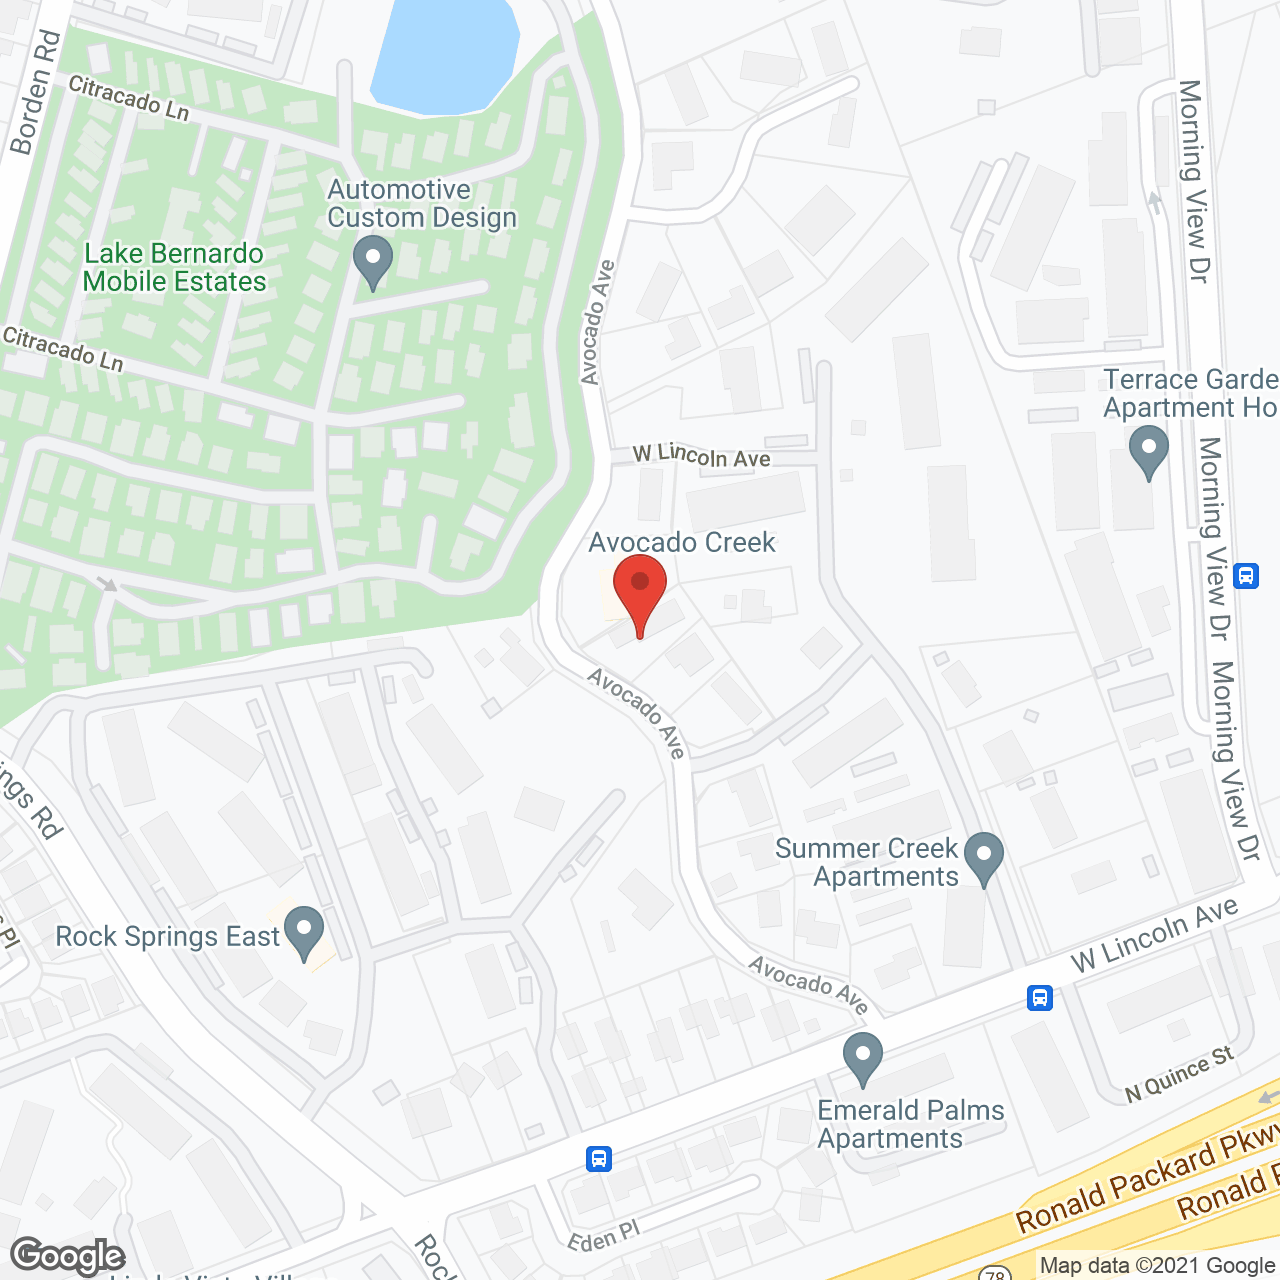 Avocado Creek in google map